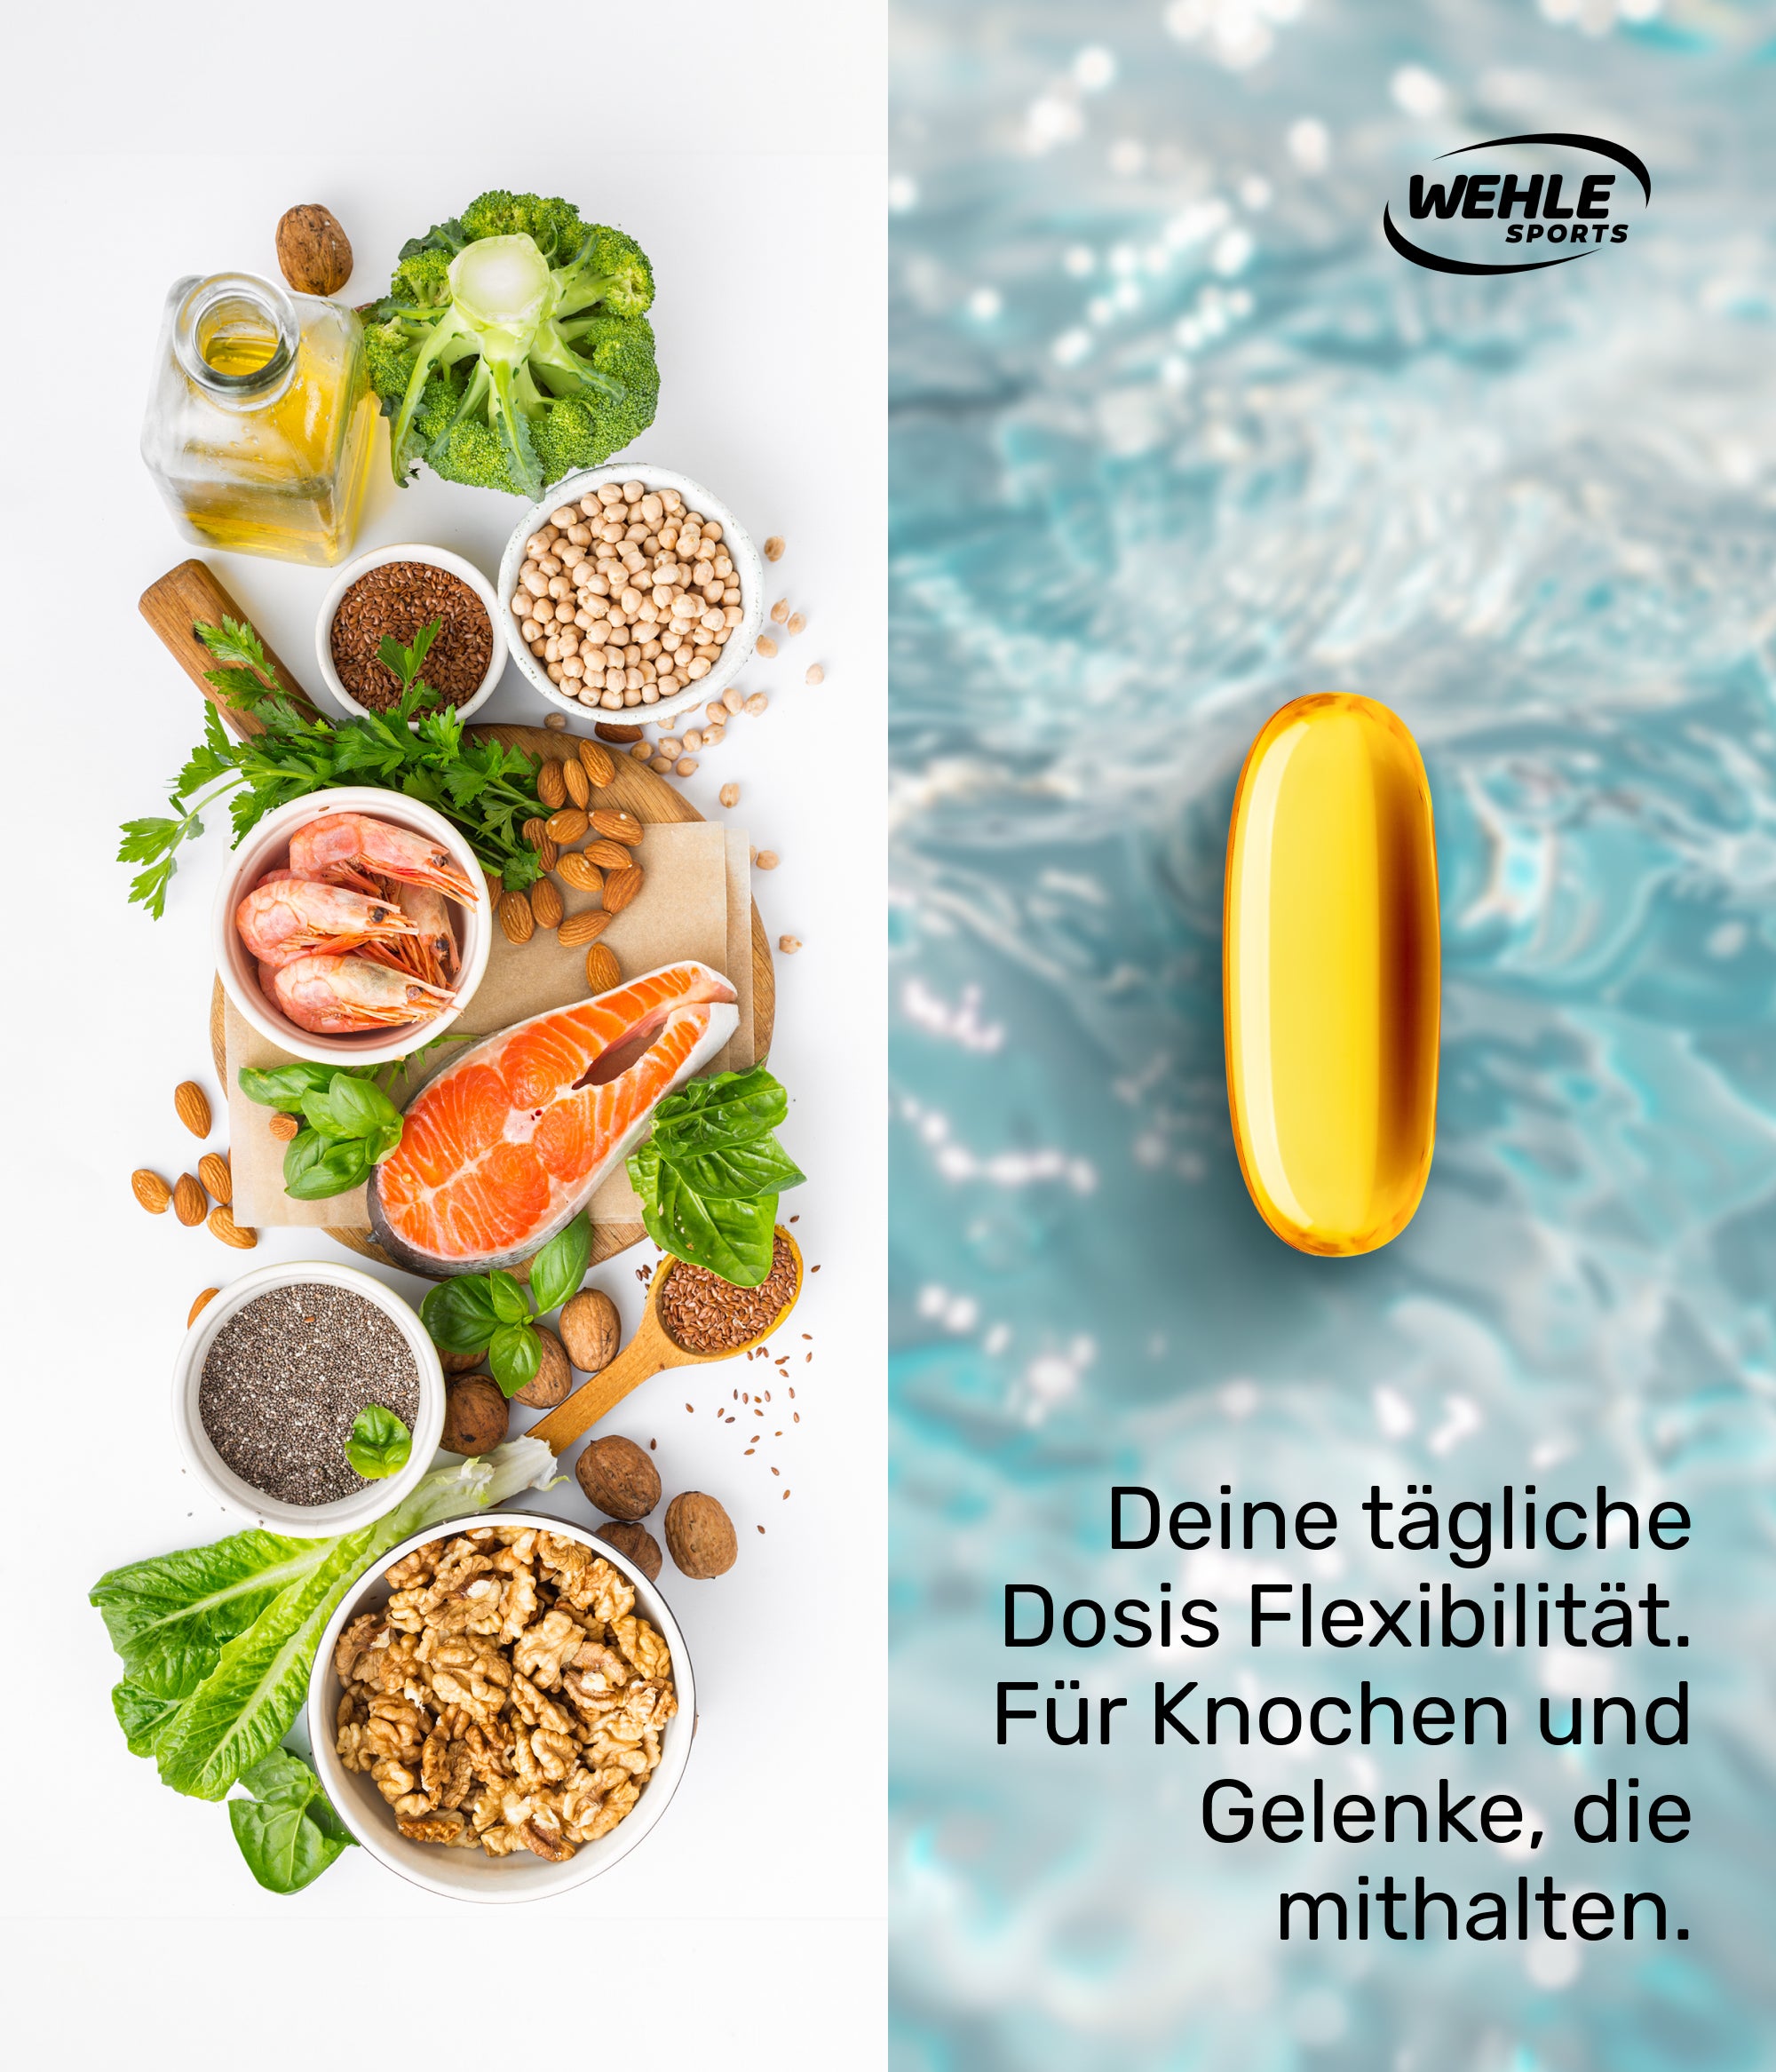 Wehle Sports Omega 3 Fischöl Tryglyceride Fish Oil Softgel 500mg EPA 250mg